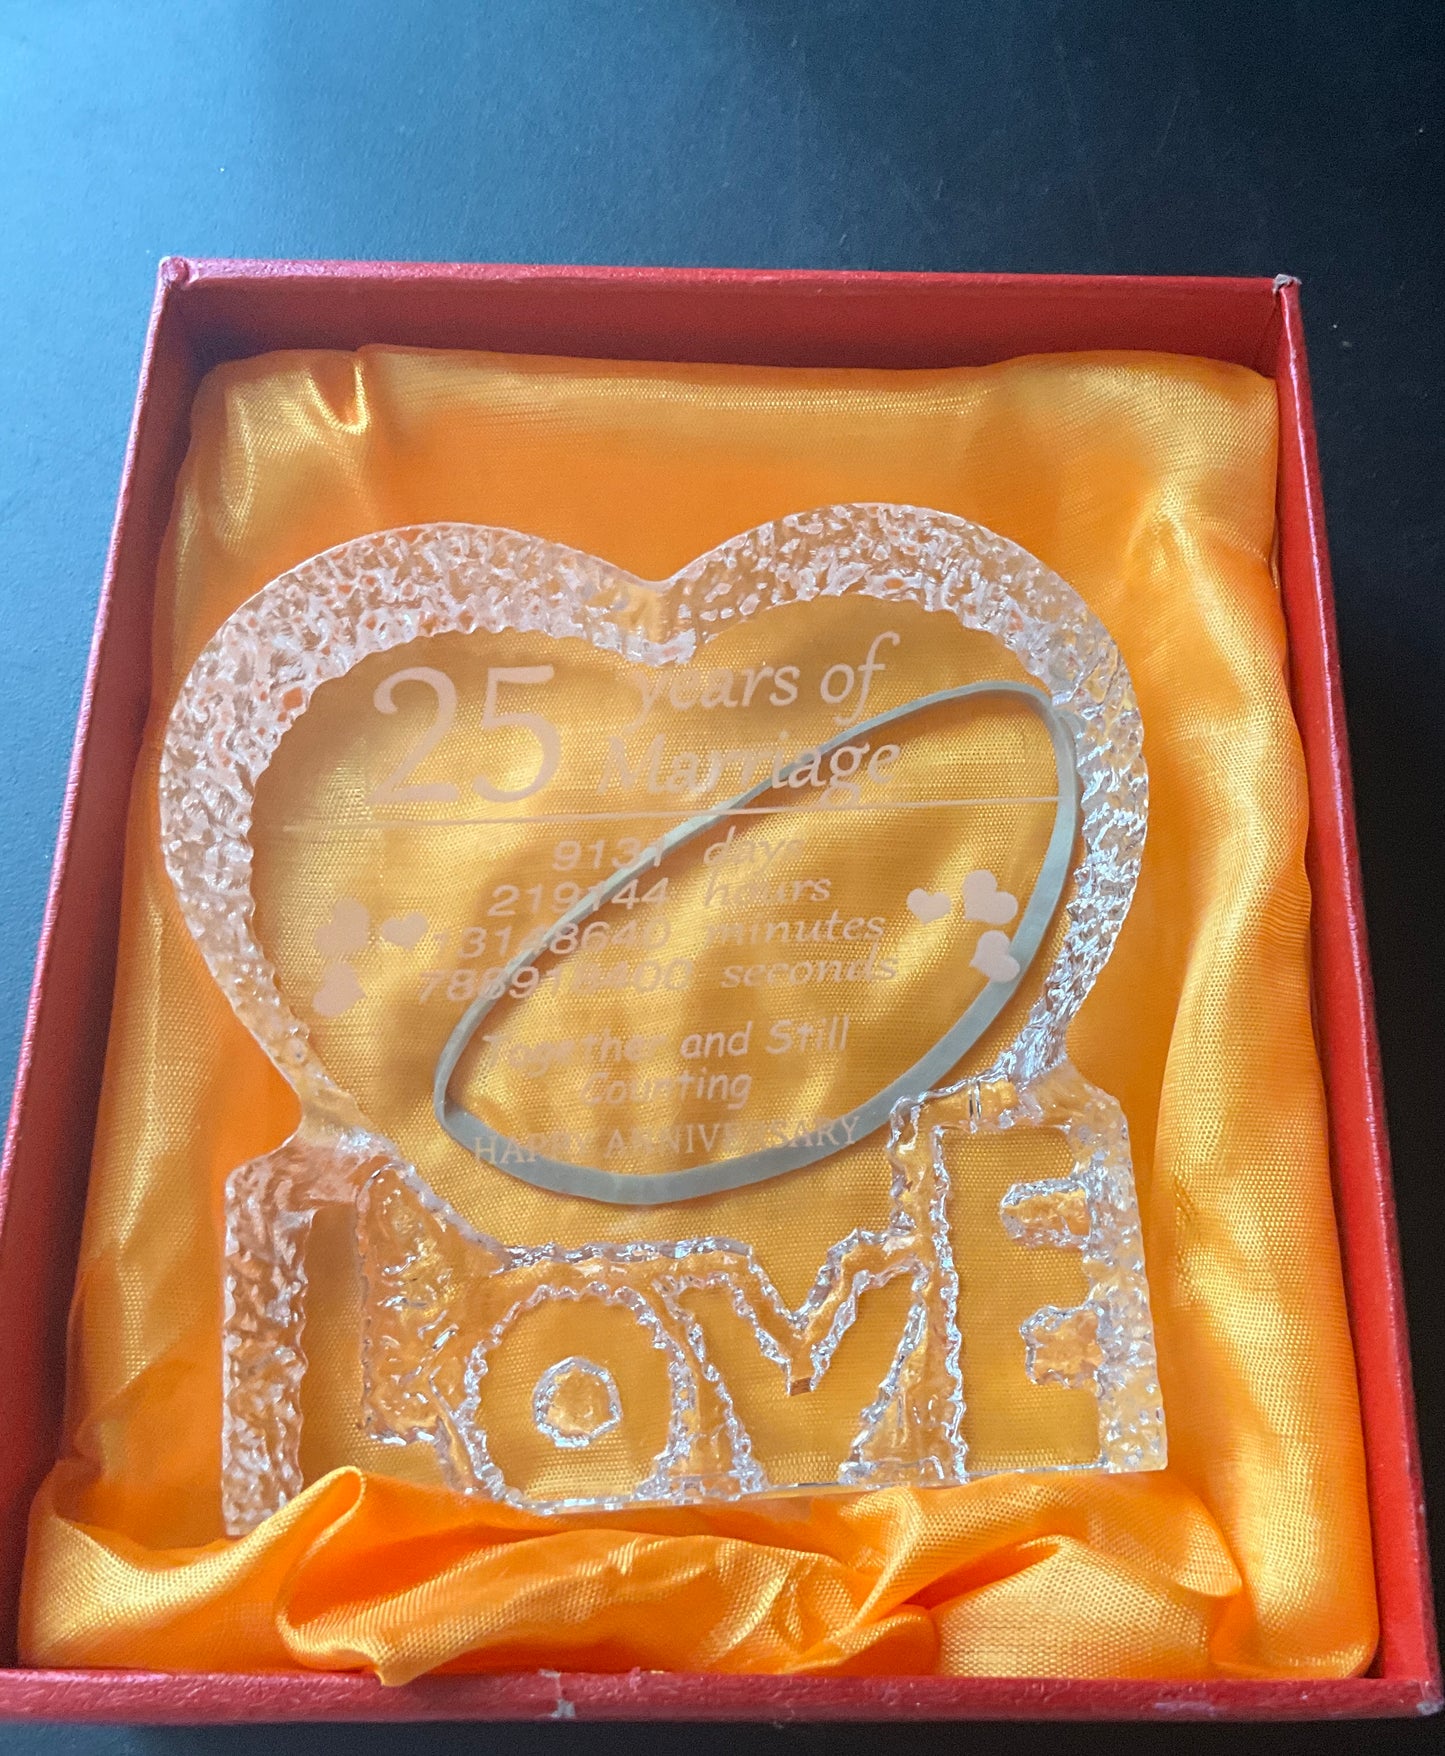 Lovly LOVE Heart 25 Years of Marriage lazer cut crystal anniversary keepsake